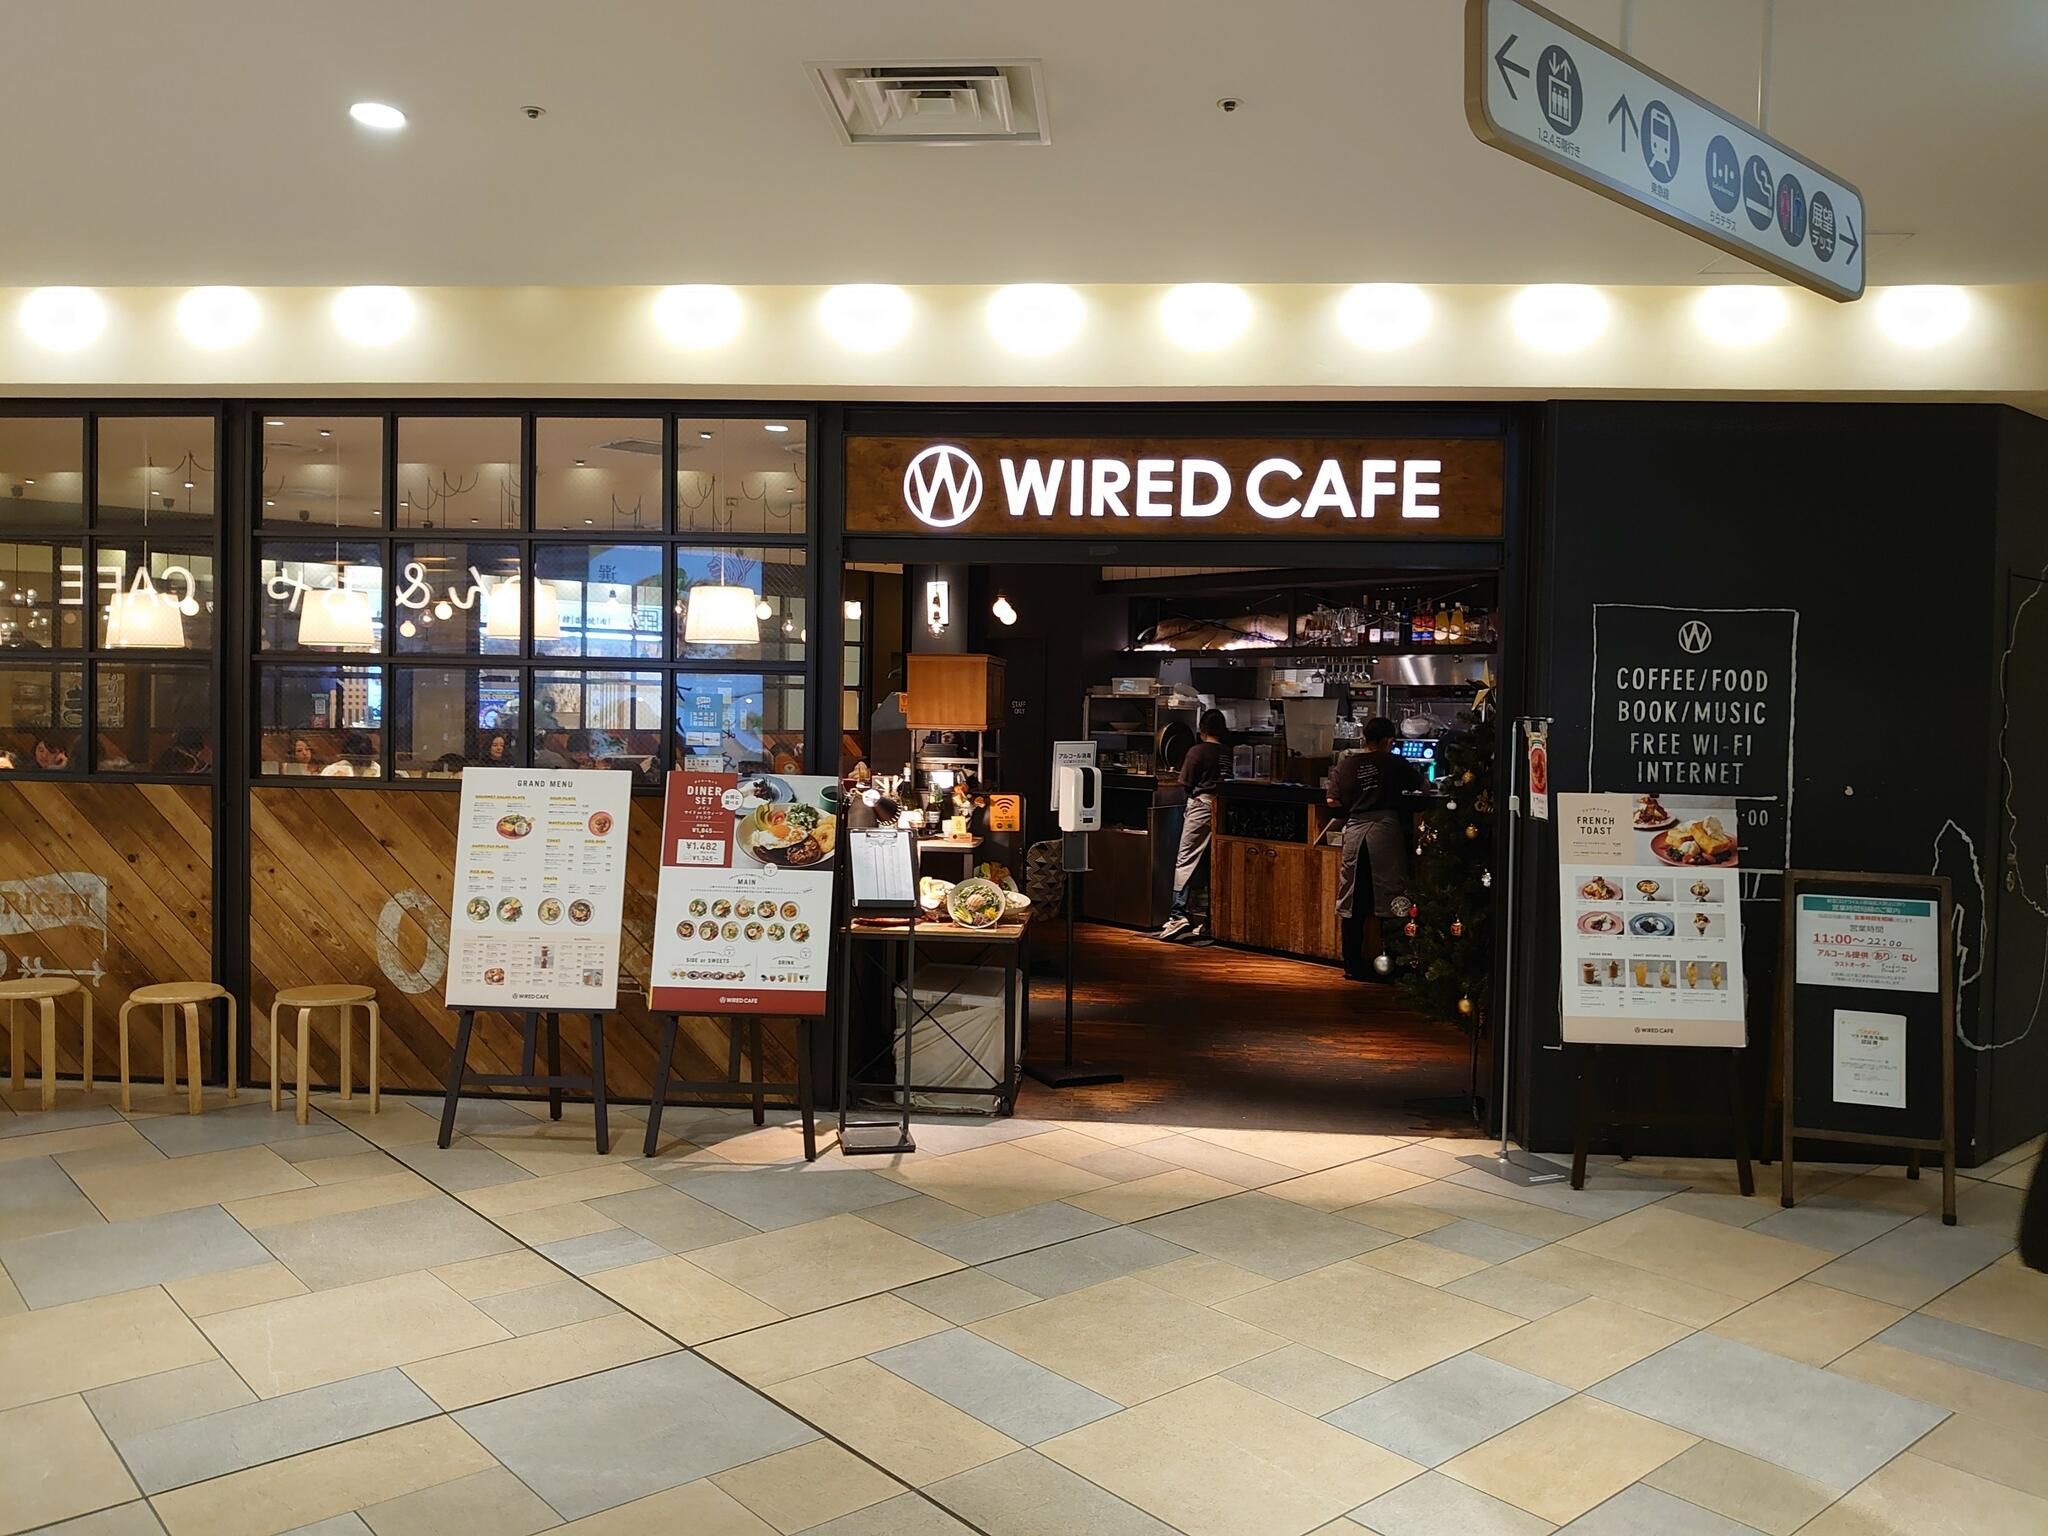 WIRED CAFE 武蔵小杉東急スクエア店の代表写真4